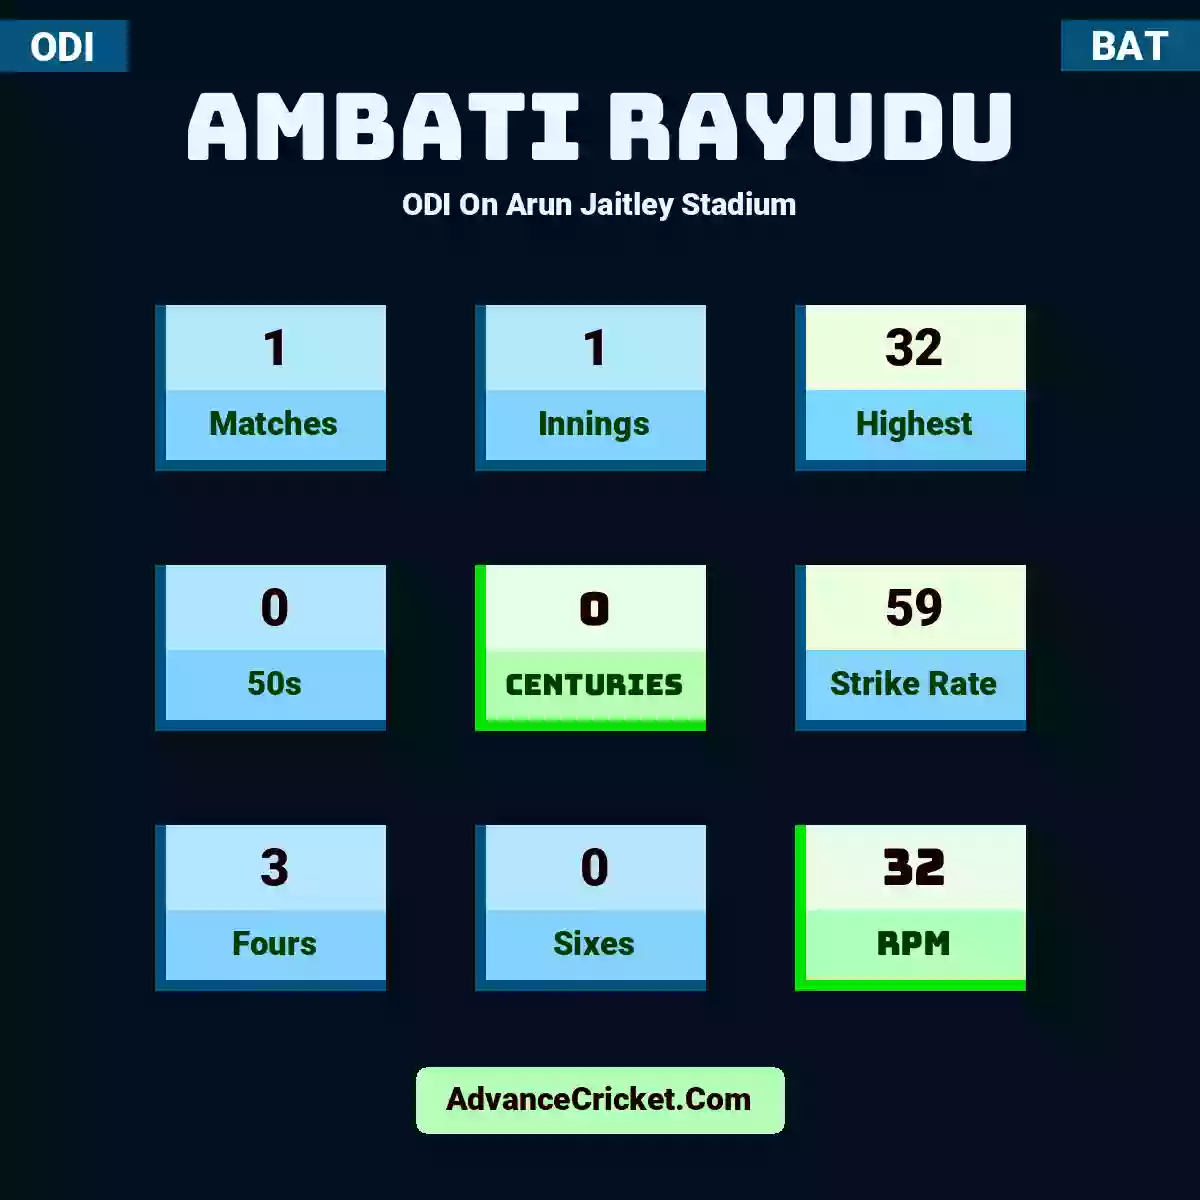 Ambati Rayudu ODI  On Arun Jaitley Stadium, Ambati Rayudu played 1 matches, scored 32 runs as highest, 0 half-centuries, and 0 centuries, with a strike rate of 59. A.Rayudu hit 3 fours and 0 sixes, with an RPM of 32.